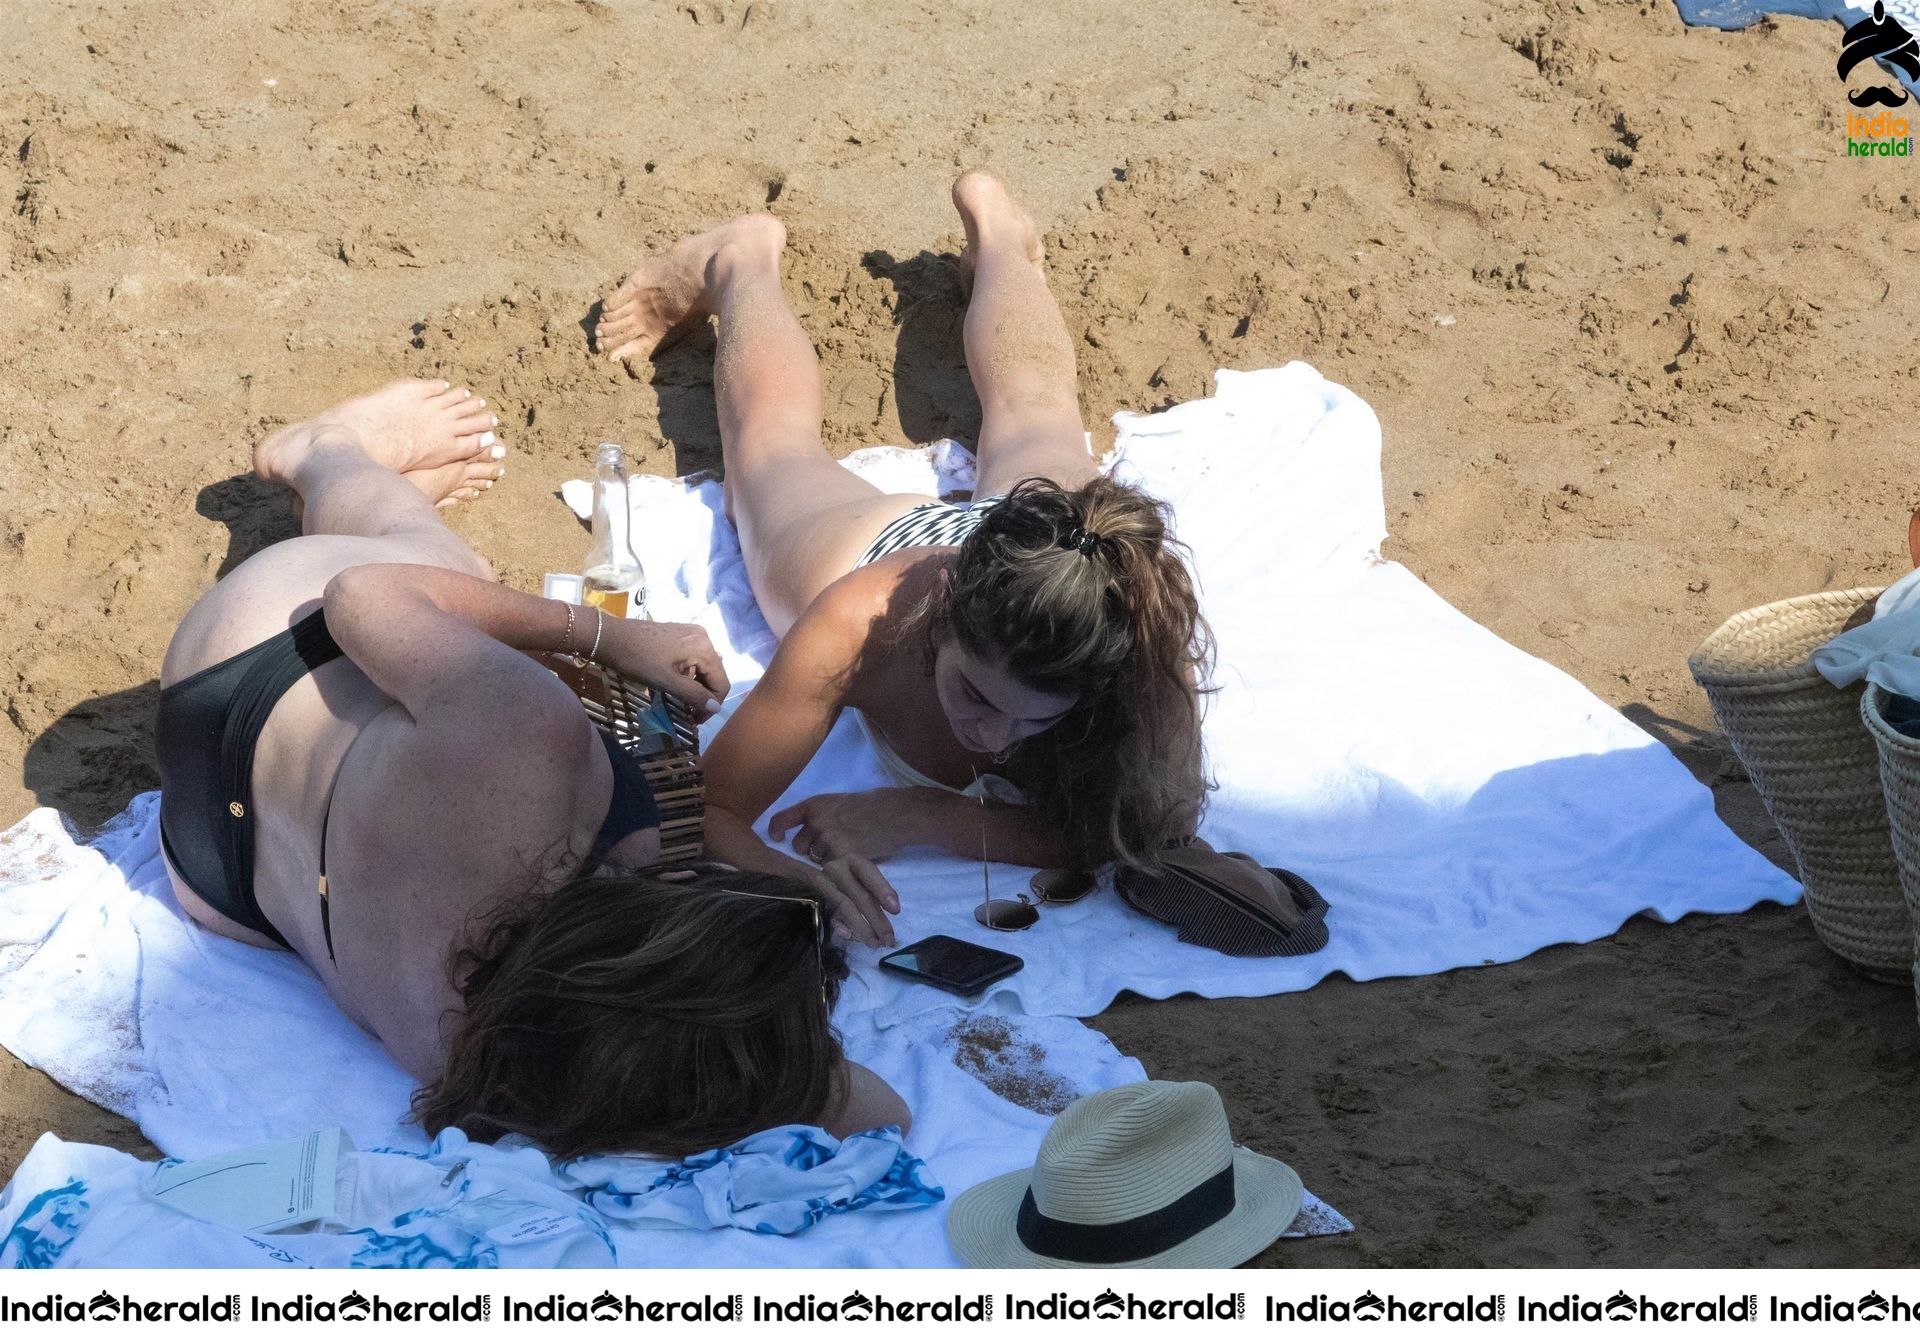 Nikki Reed In Bikini And Enjoying Her Boy Friend At Beach